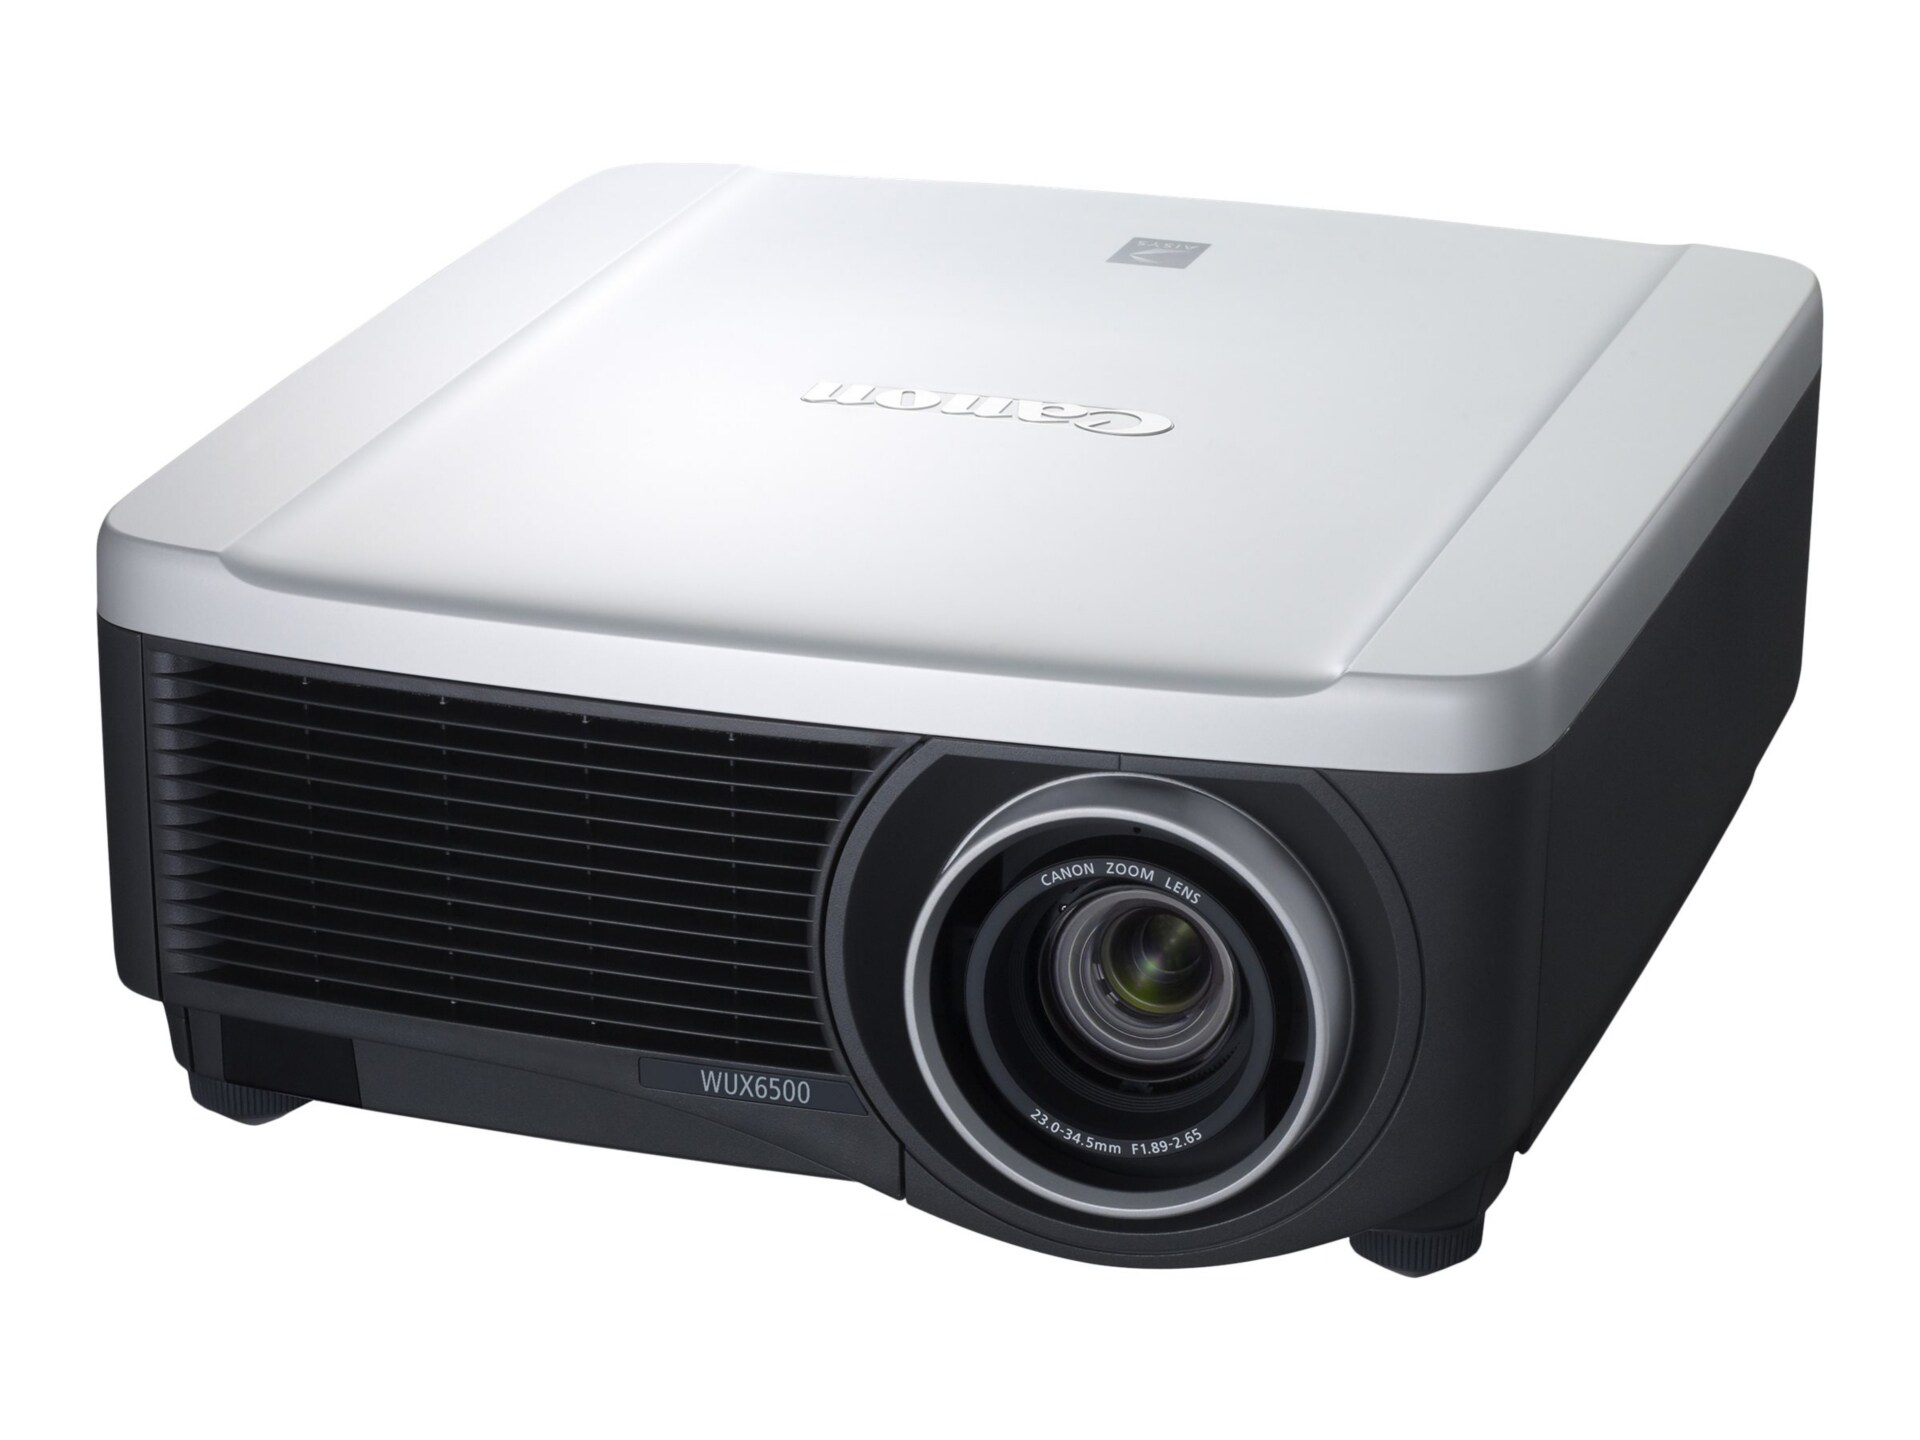 Canon REALiS WUX6500 Pro AV - LCOS projector - zoom lens - LAN